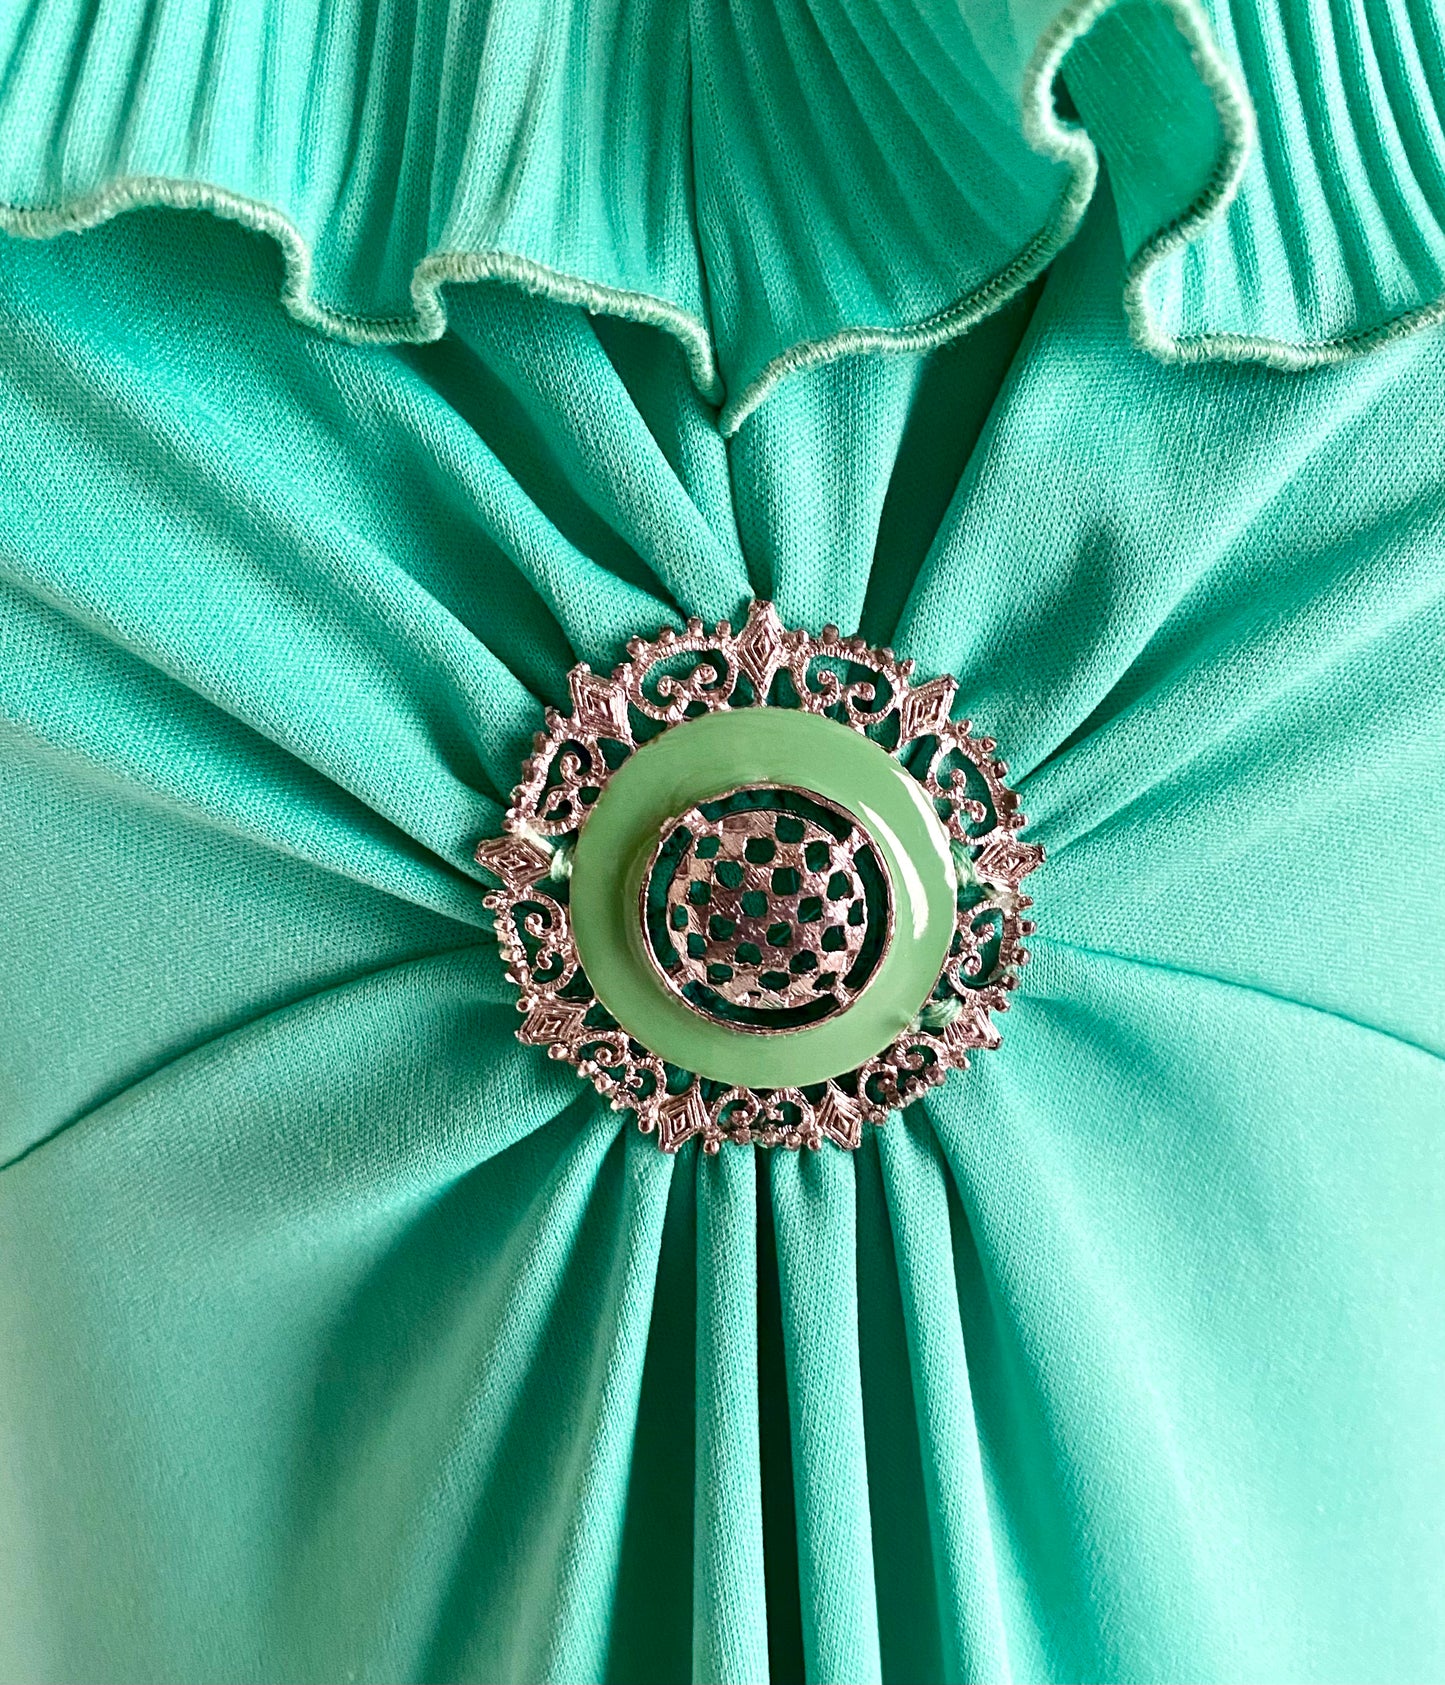 1960s Mermaid Green Maxi Dress